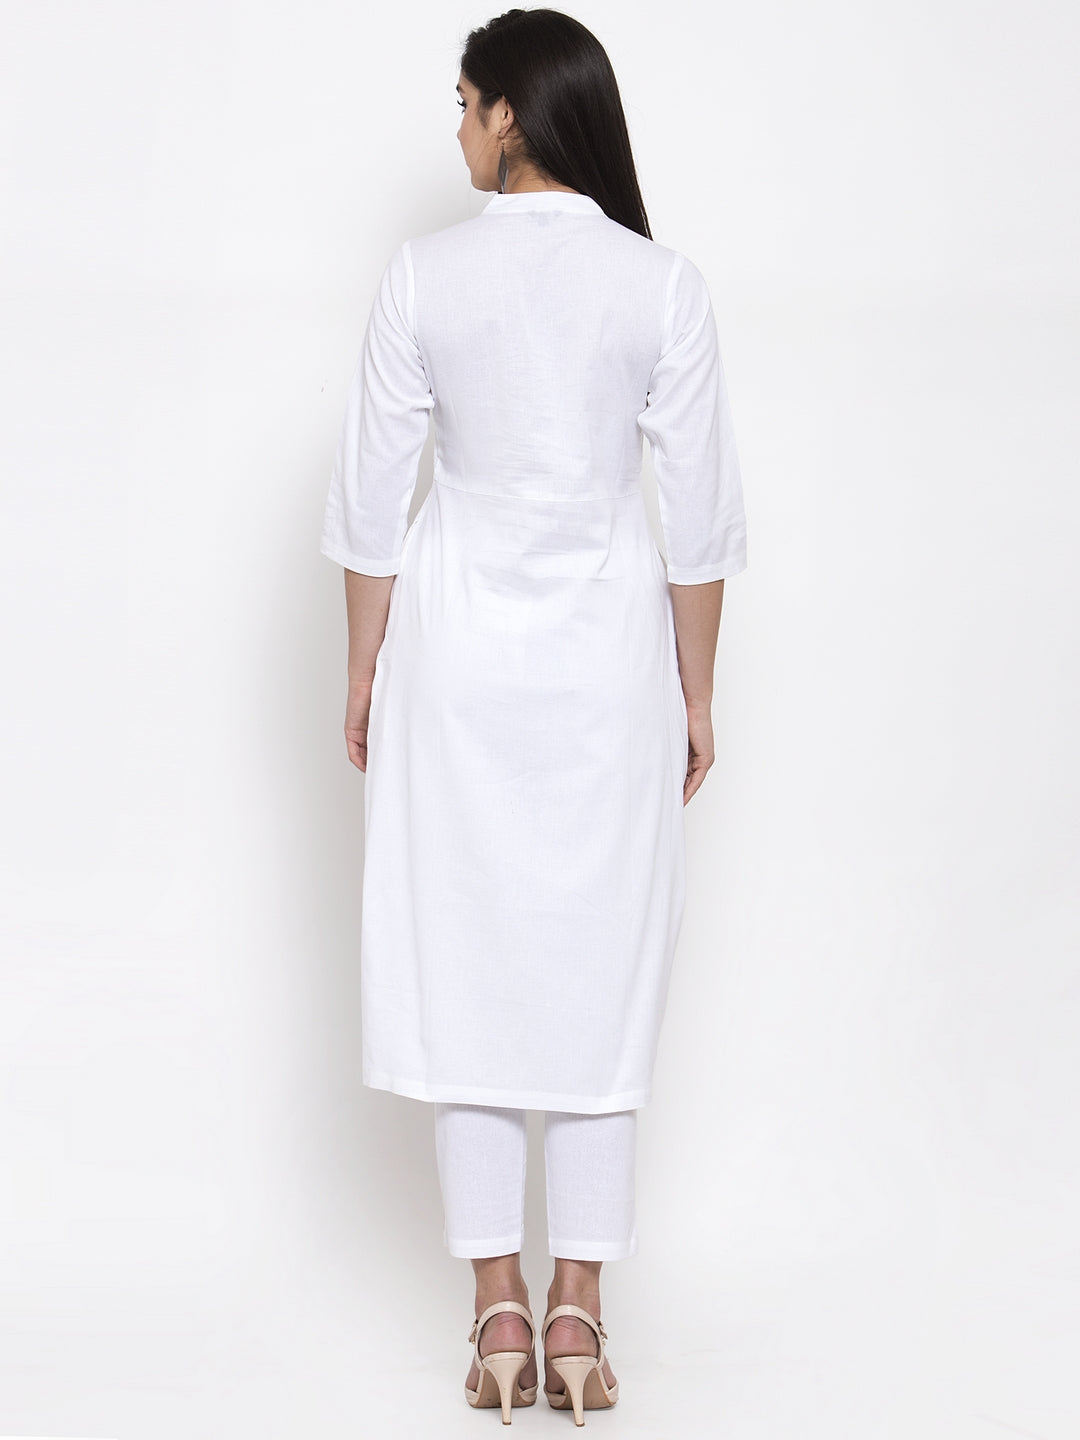 Buy plain white kurtas for women under 500 in India @ Limeroad